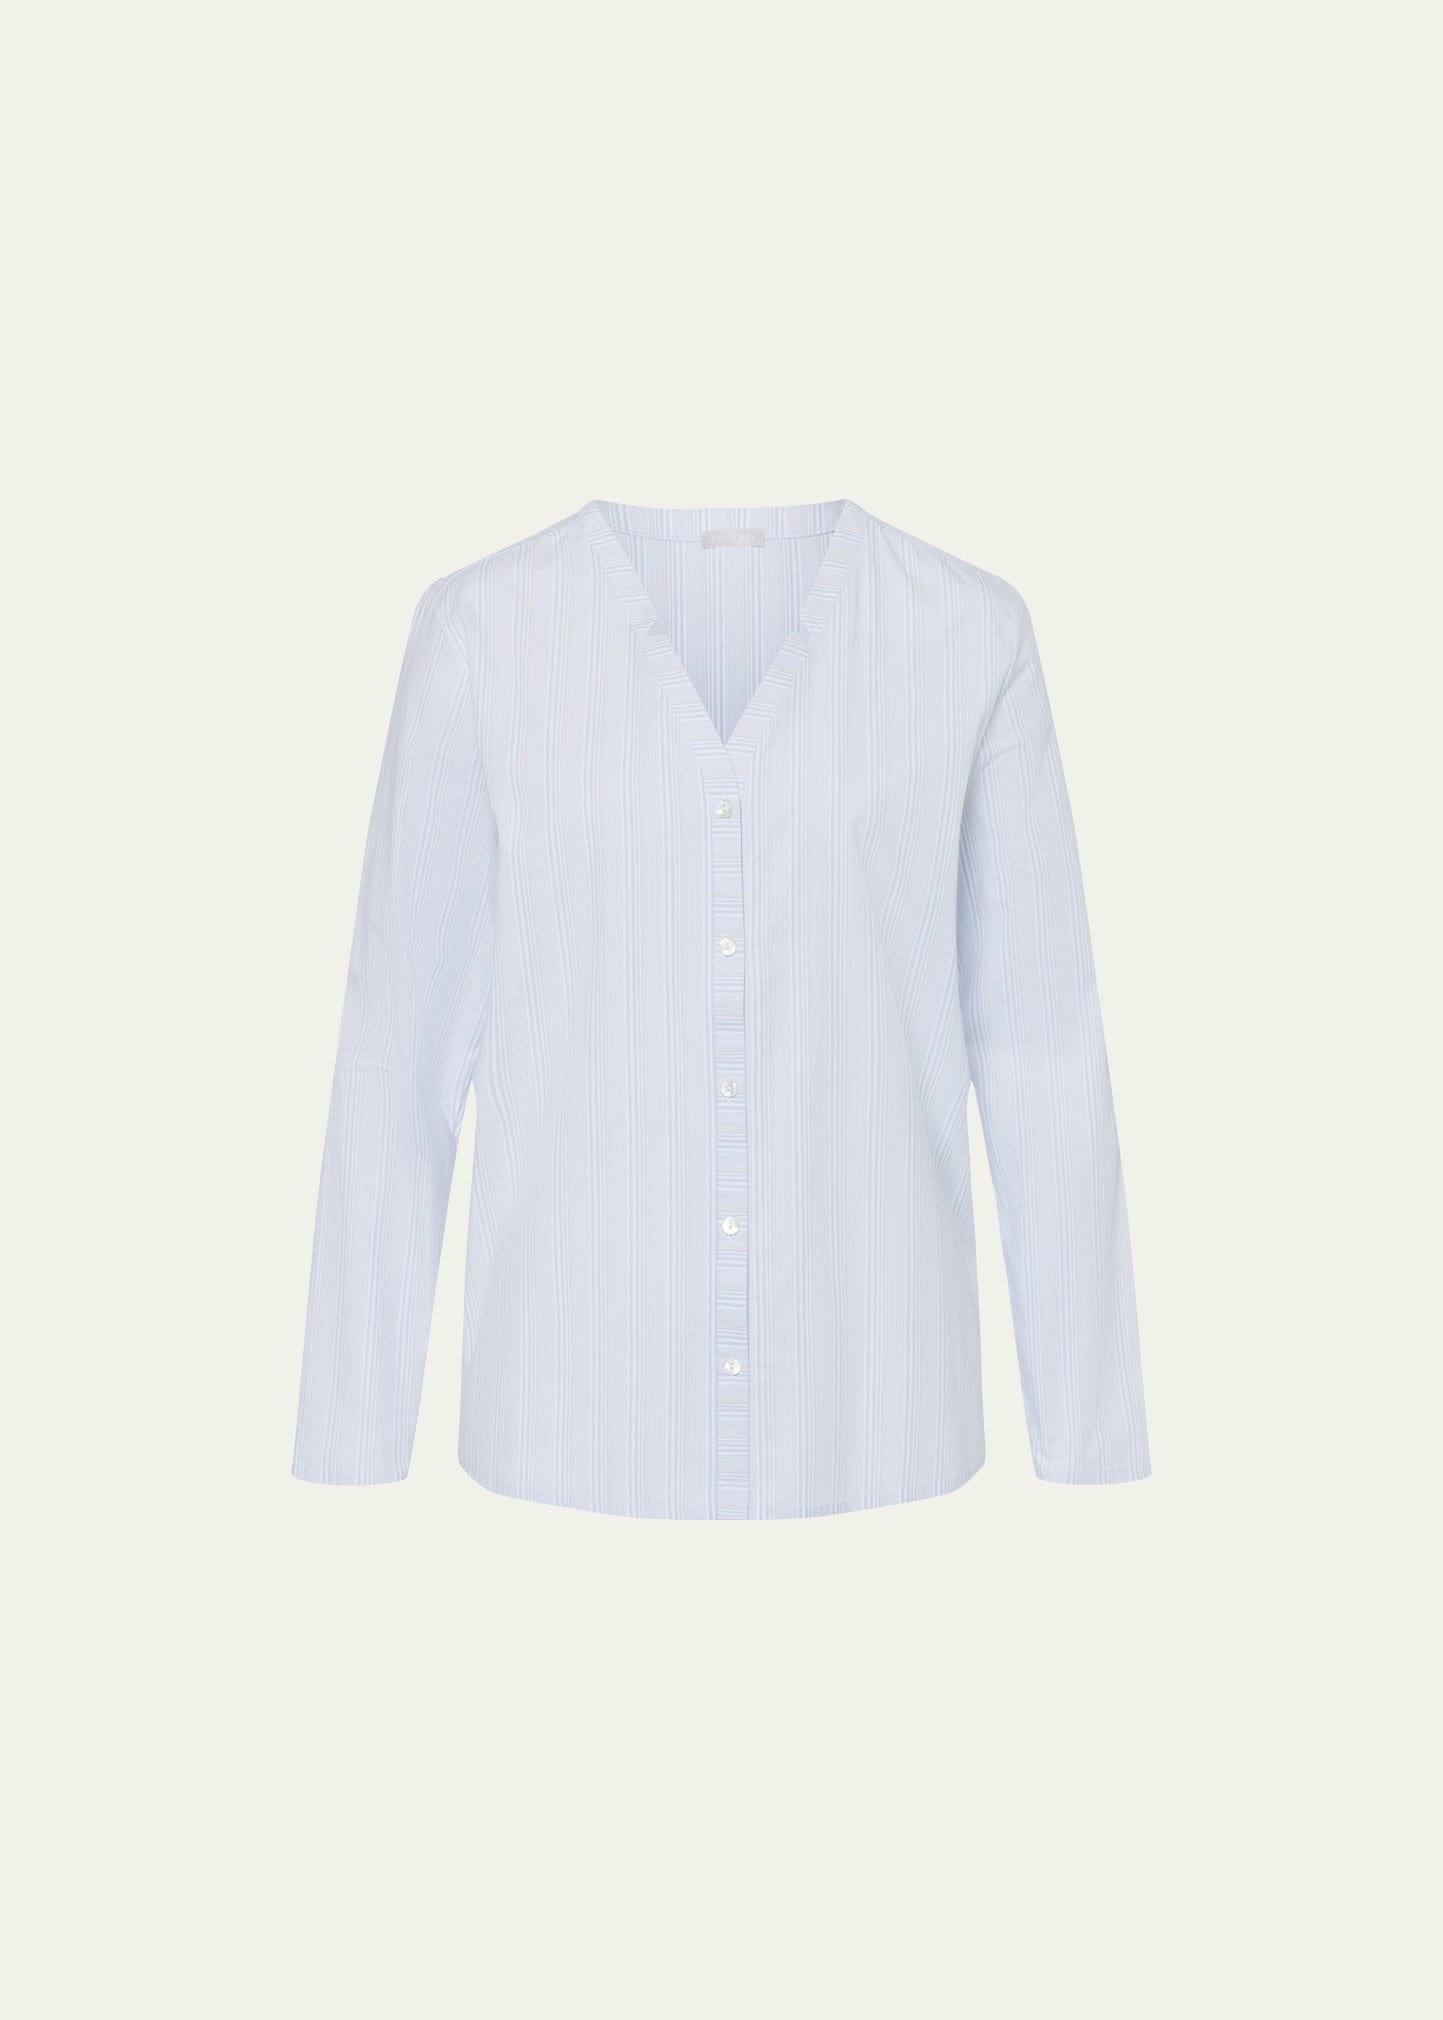 Hanro Striped Button-Down Sleep and Lounge Shirt